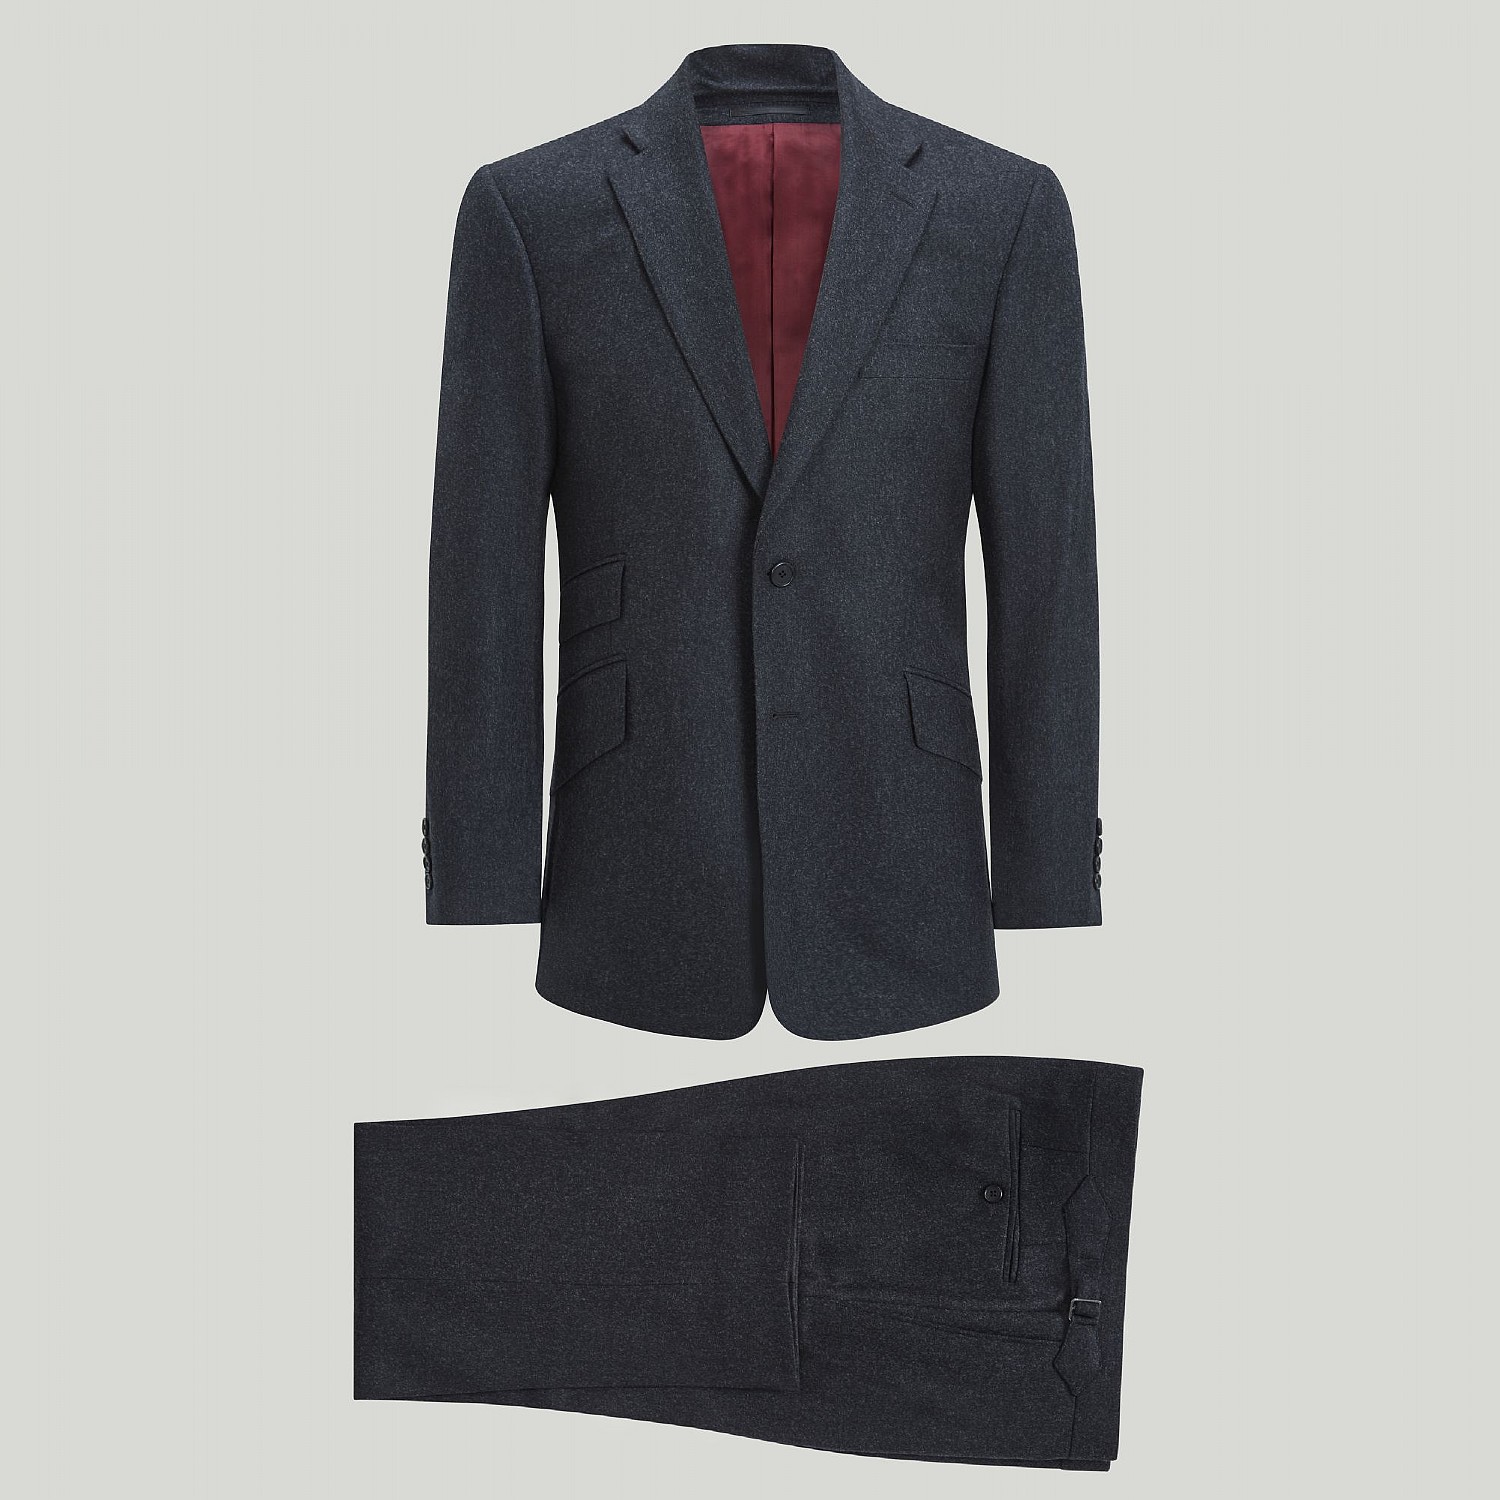 Harvie & Hudson Grey Flannel Suit